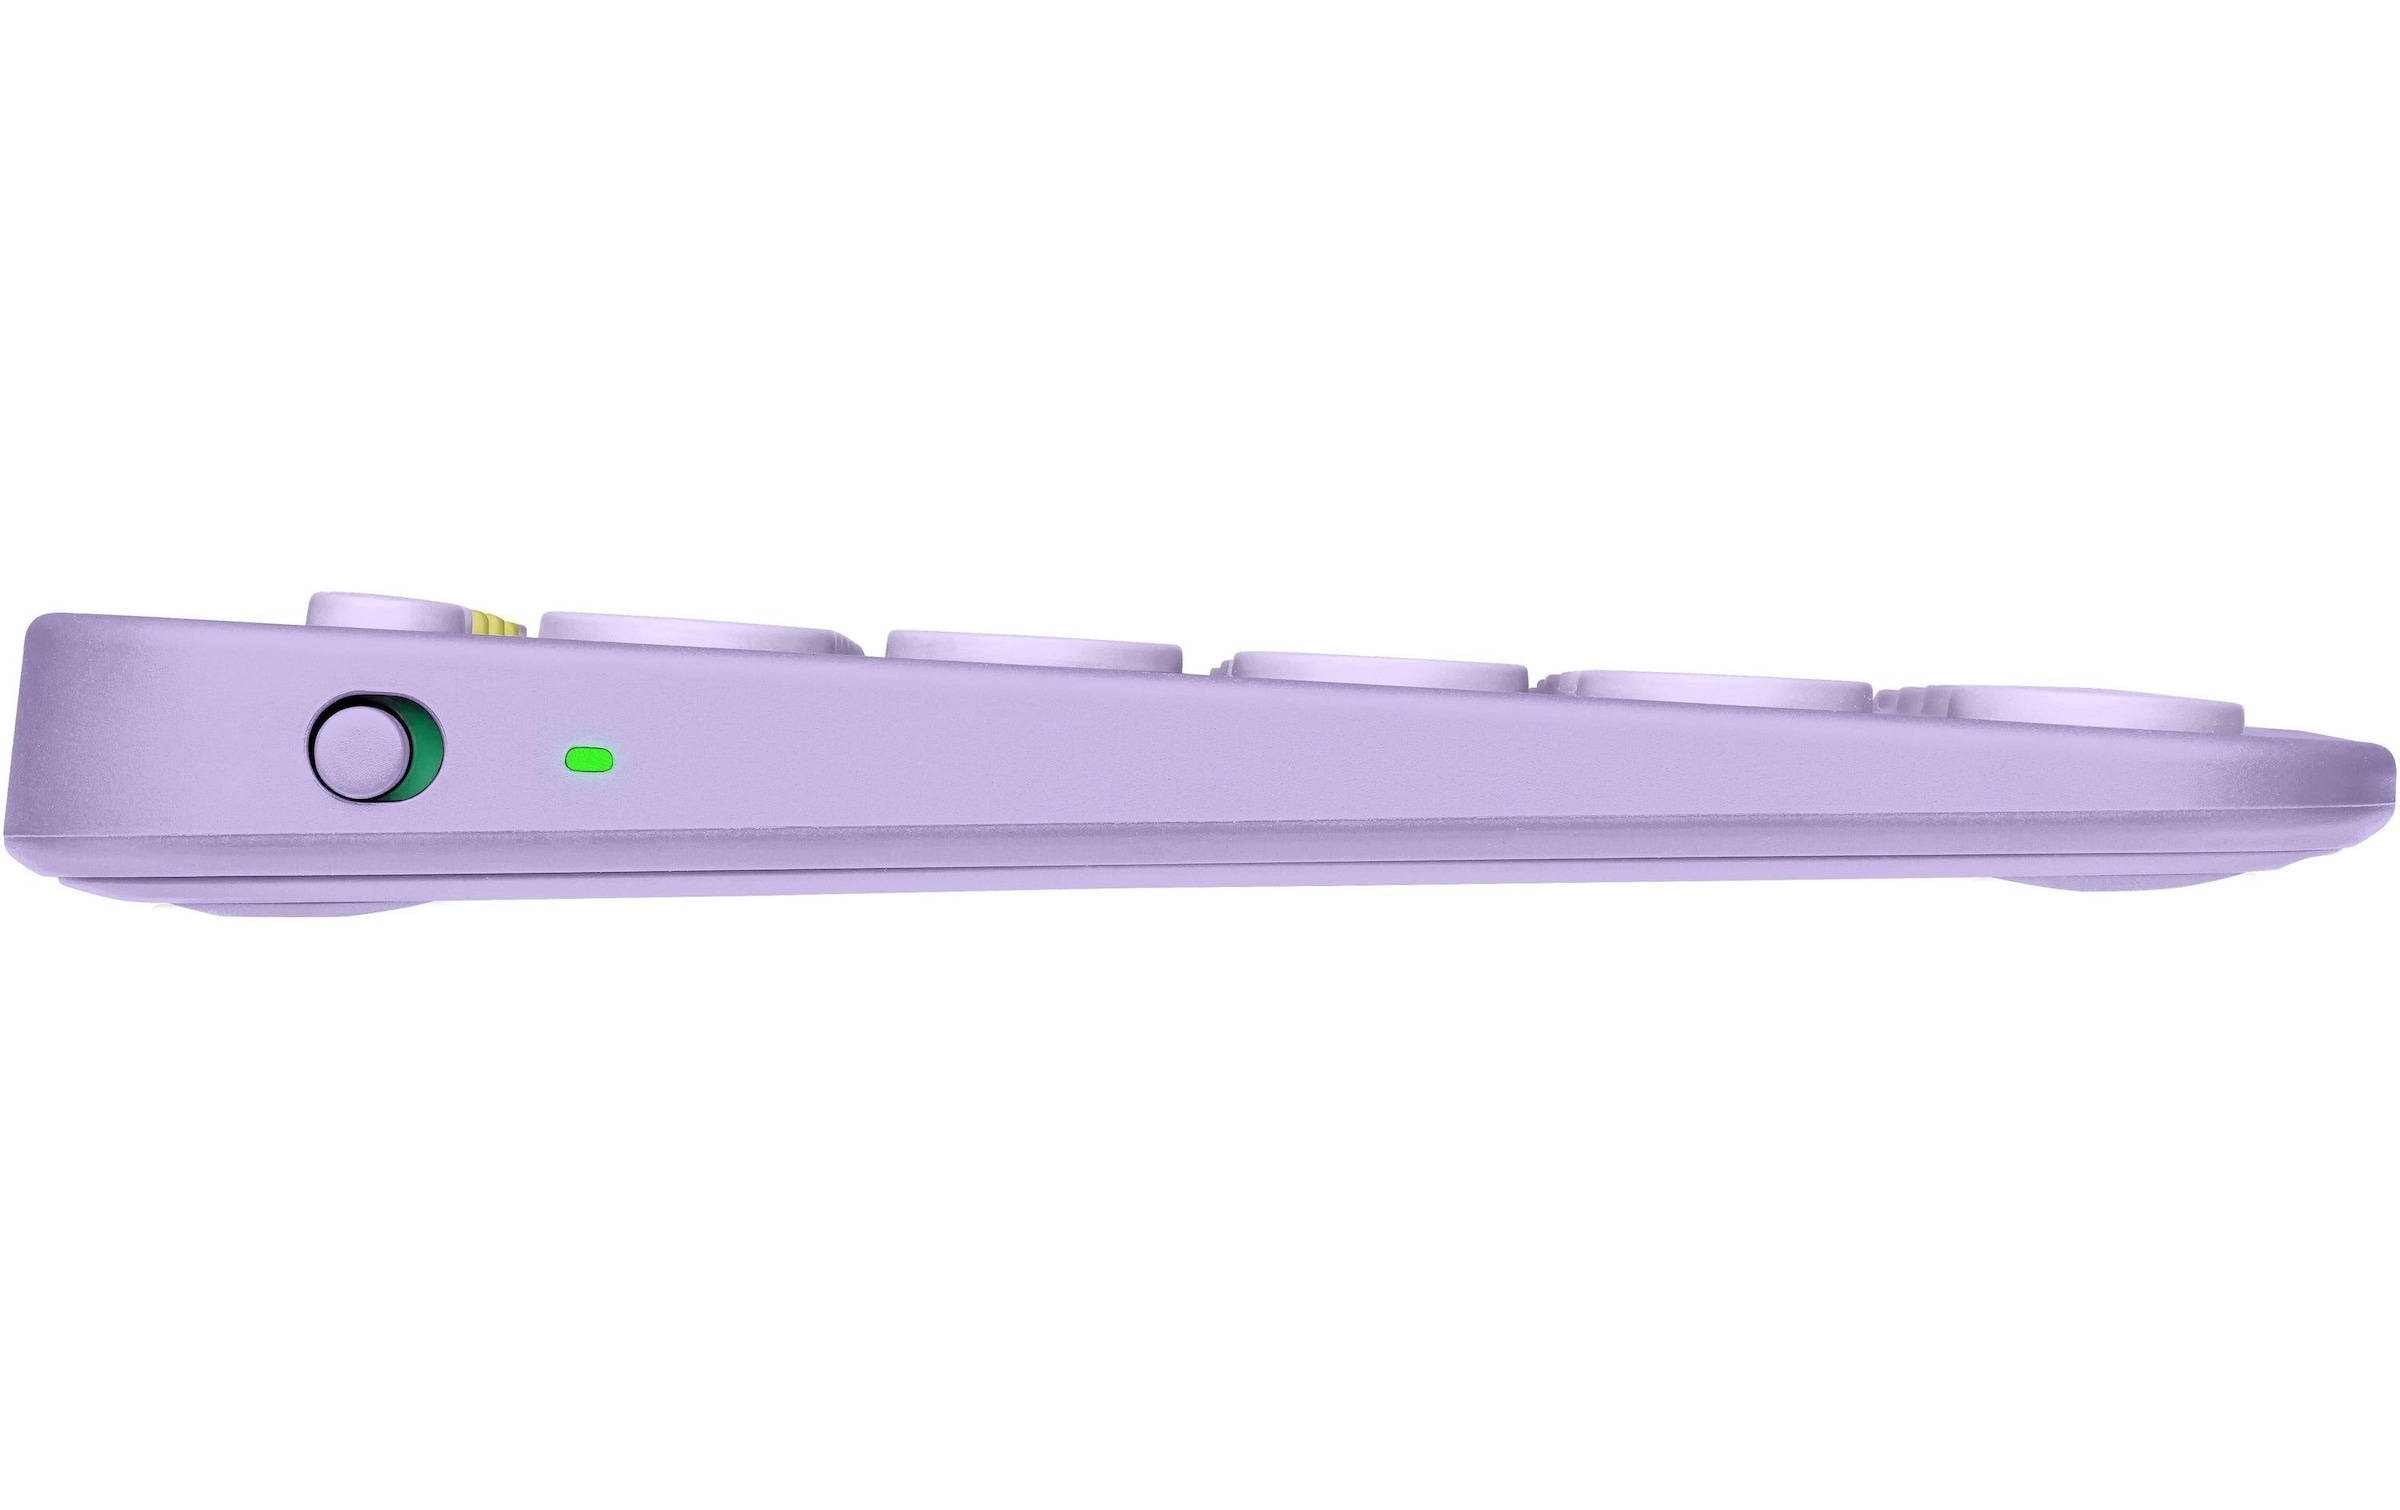 Logitech Wireless-Tastatur »K380 Multi-Device Lavendel«